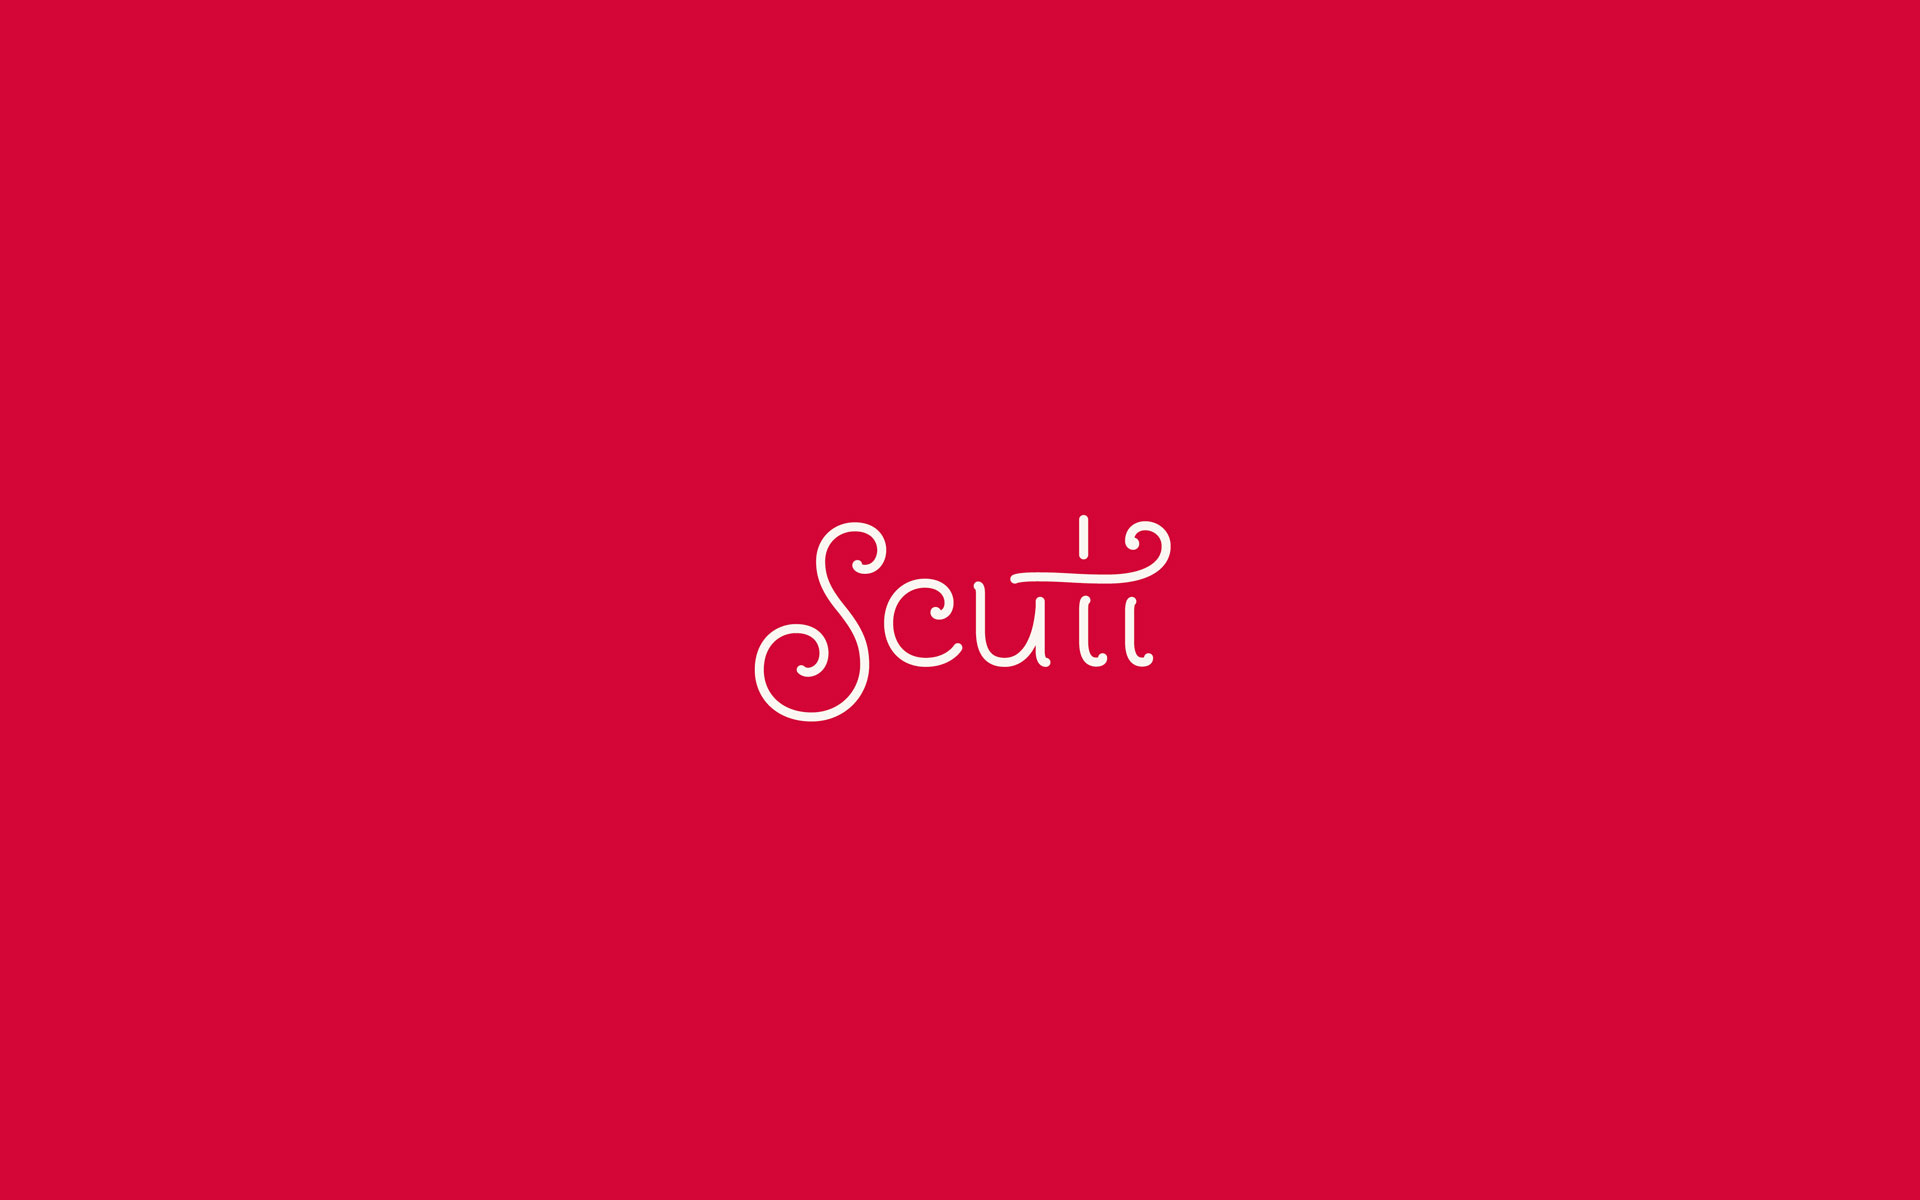 Scuti - Gourmet Desserts & Chocolates - Identity Design - Logotype red bg